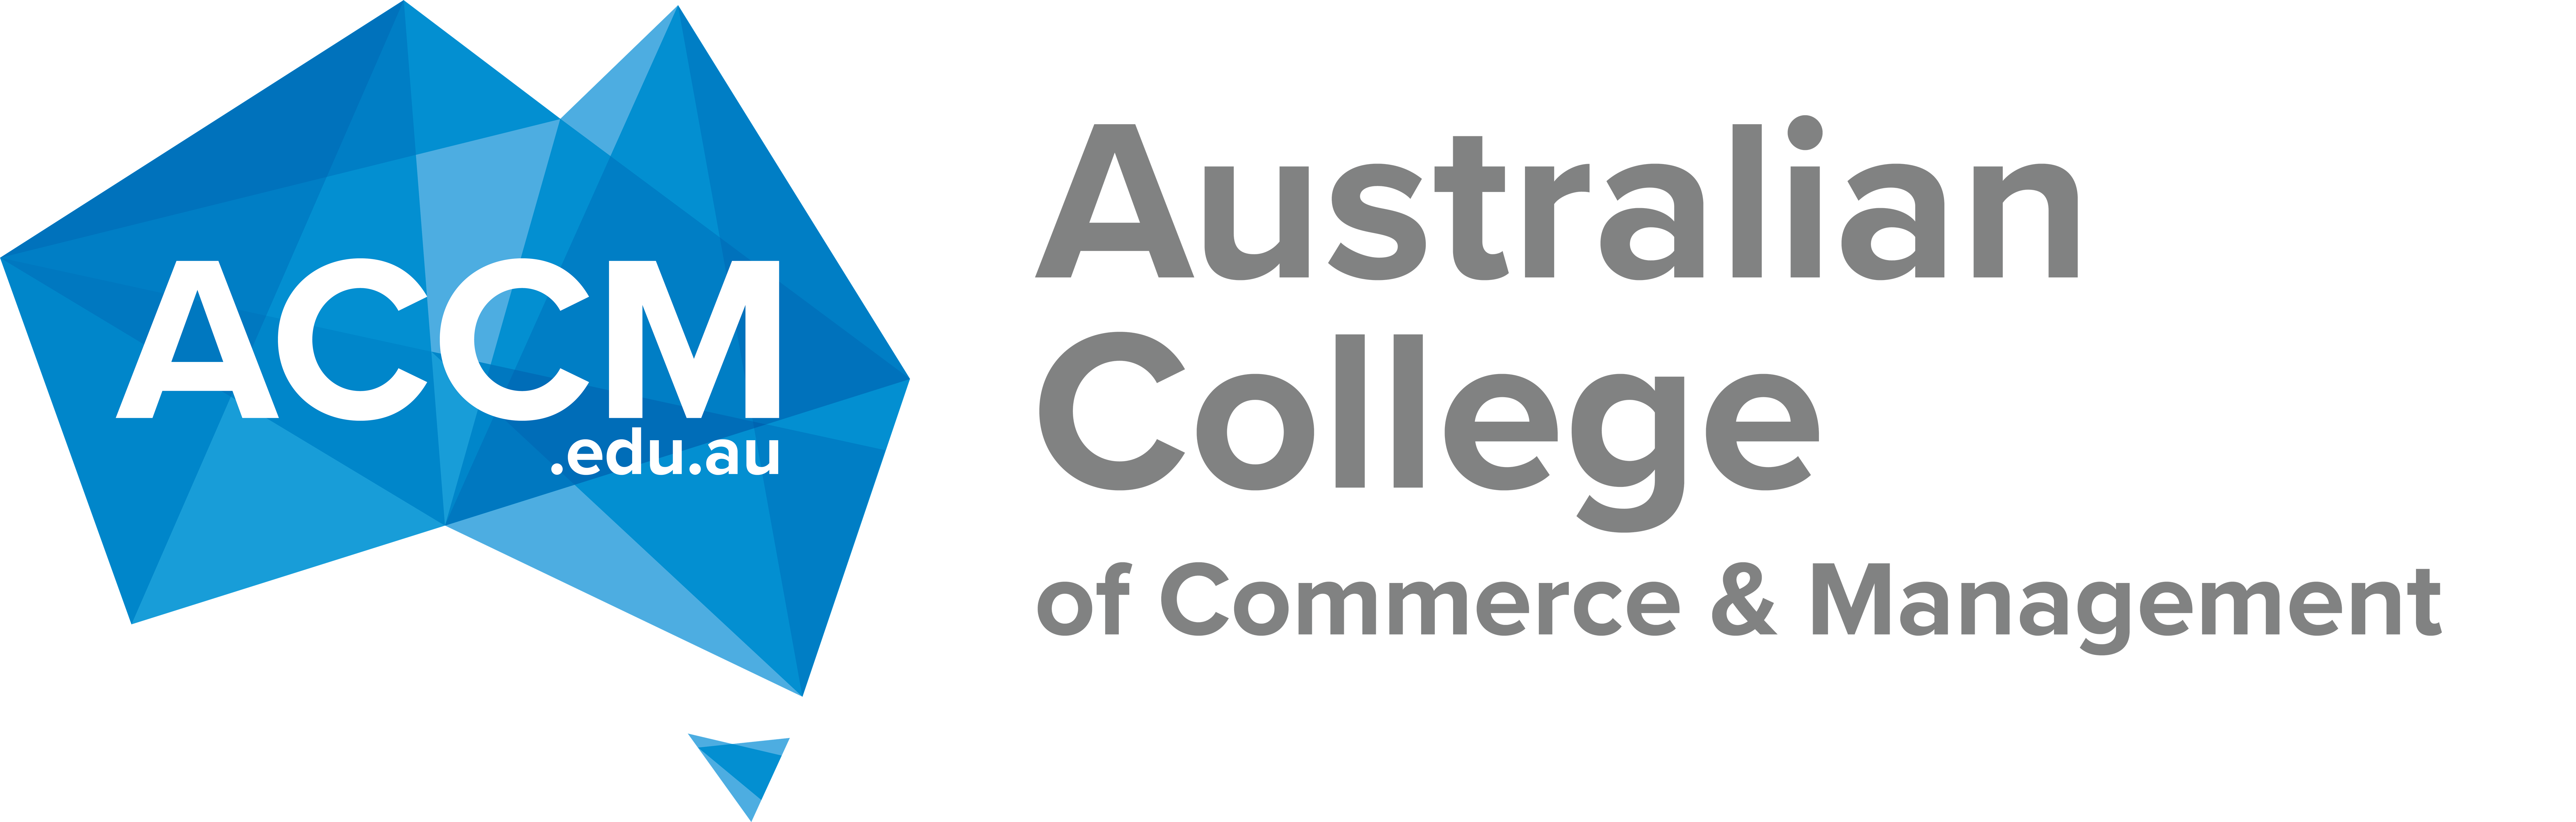 ACCM Logo 2021 export v4